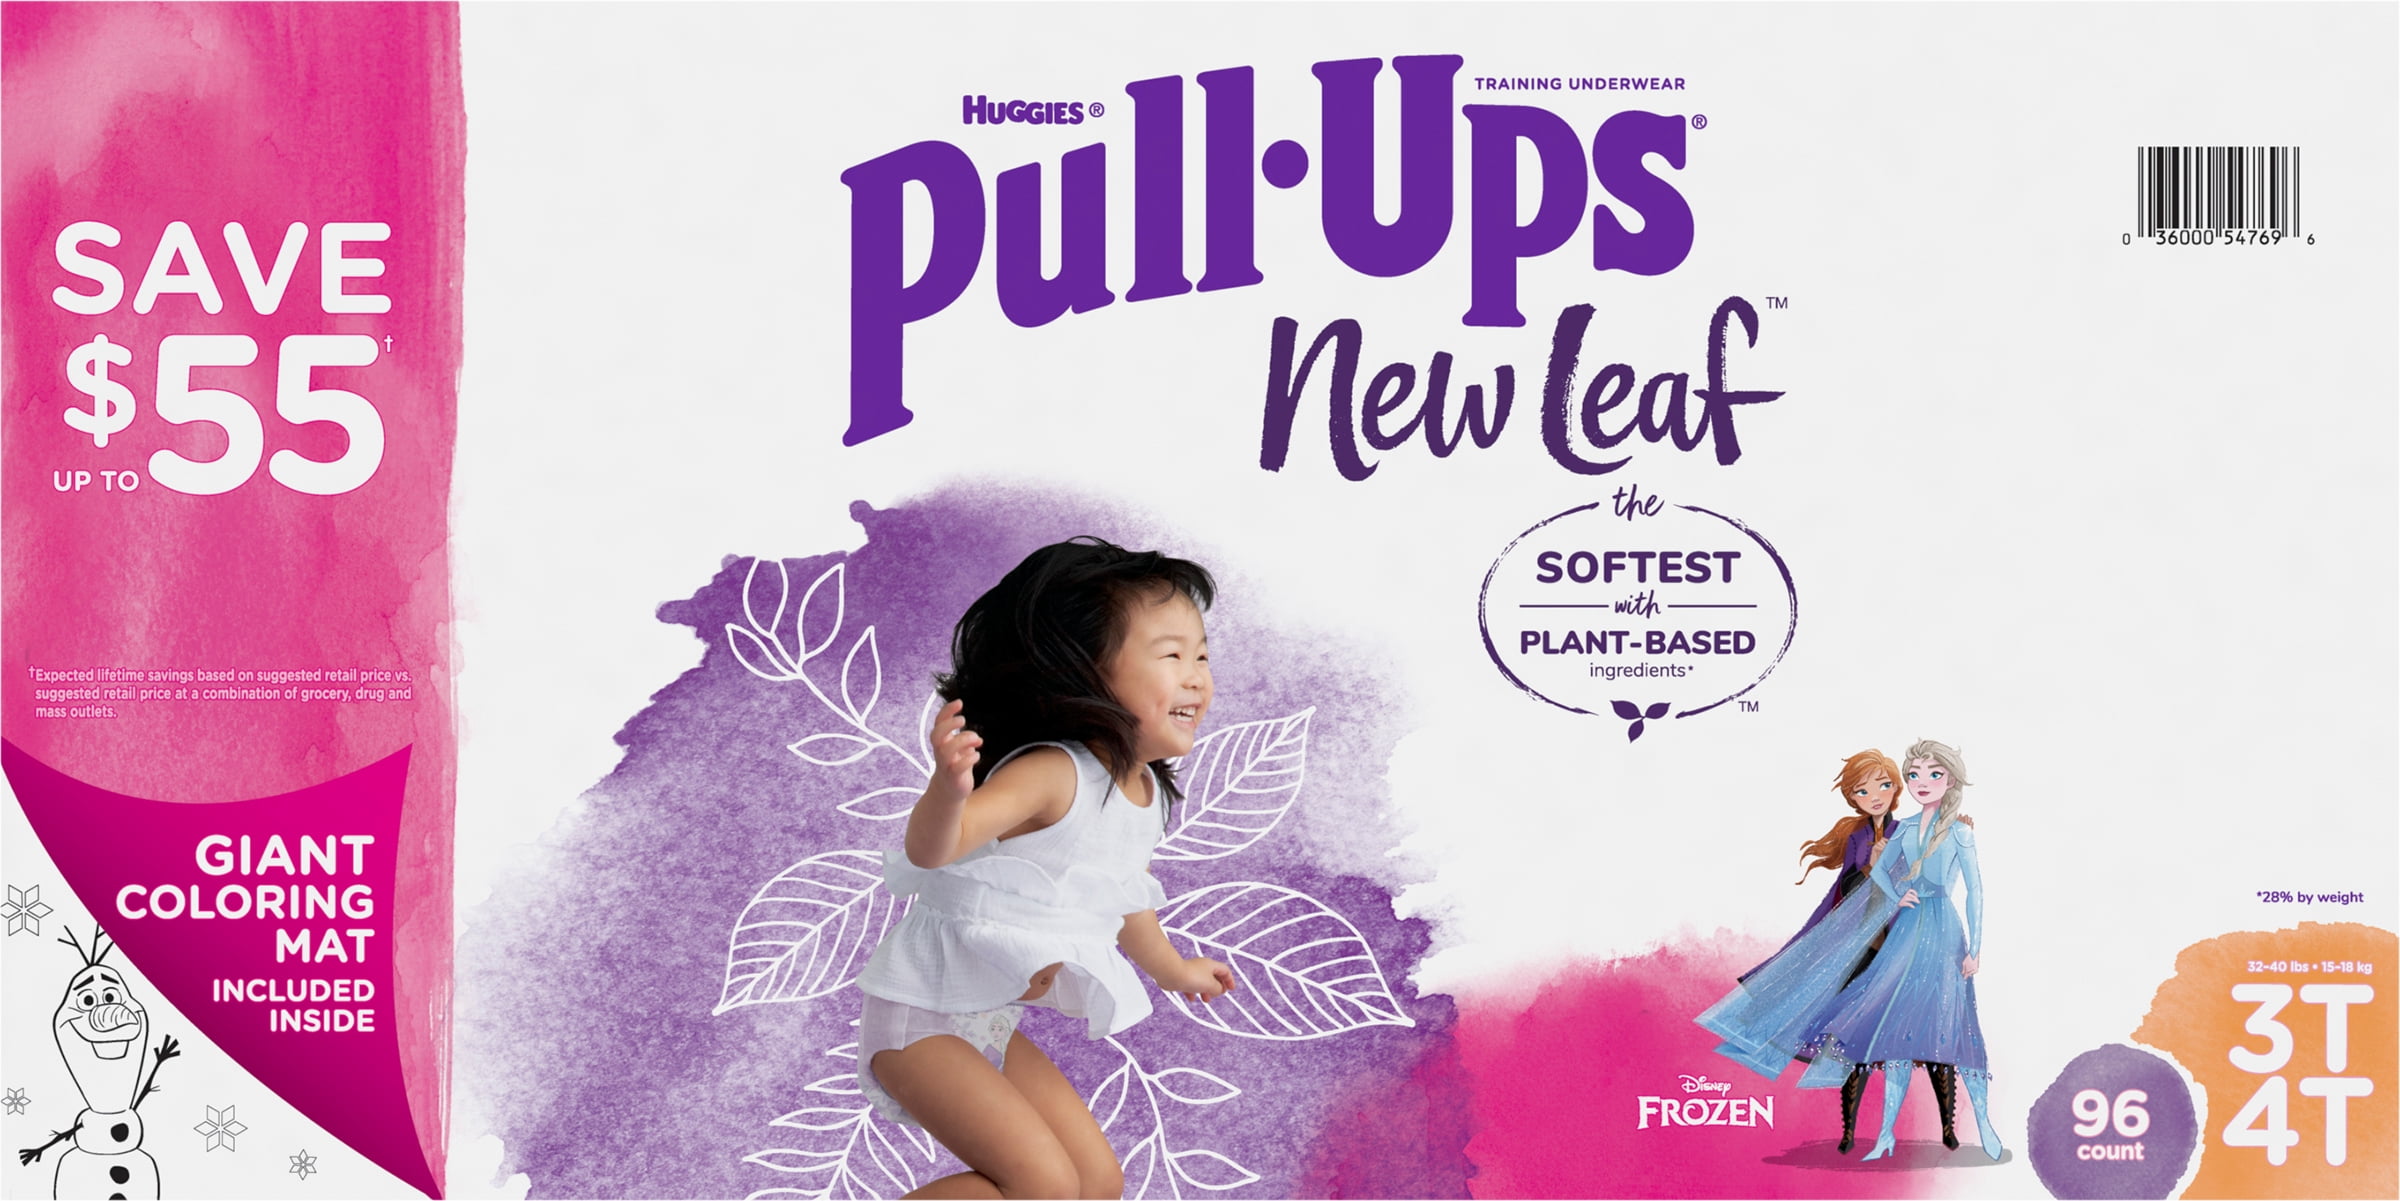 Huggies Pull-Ups New Leaf Training Underwear for Nepal